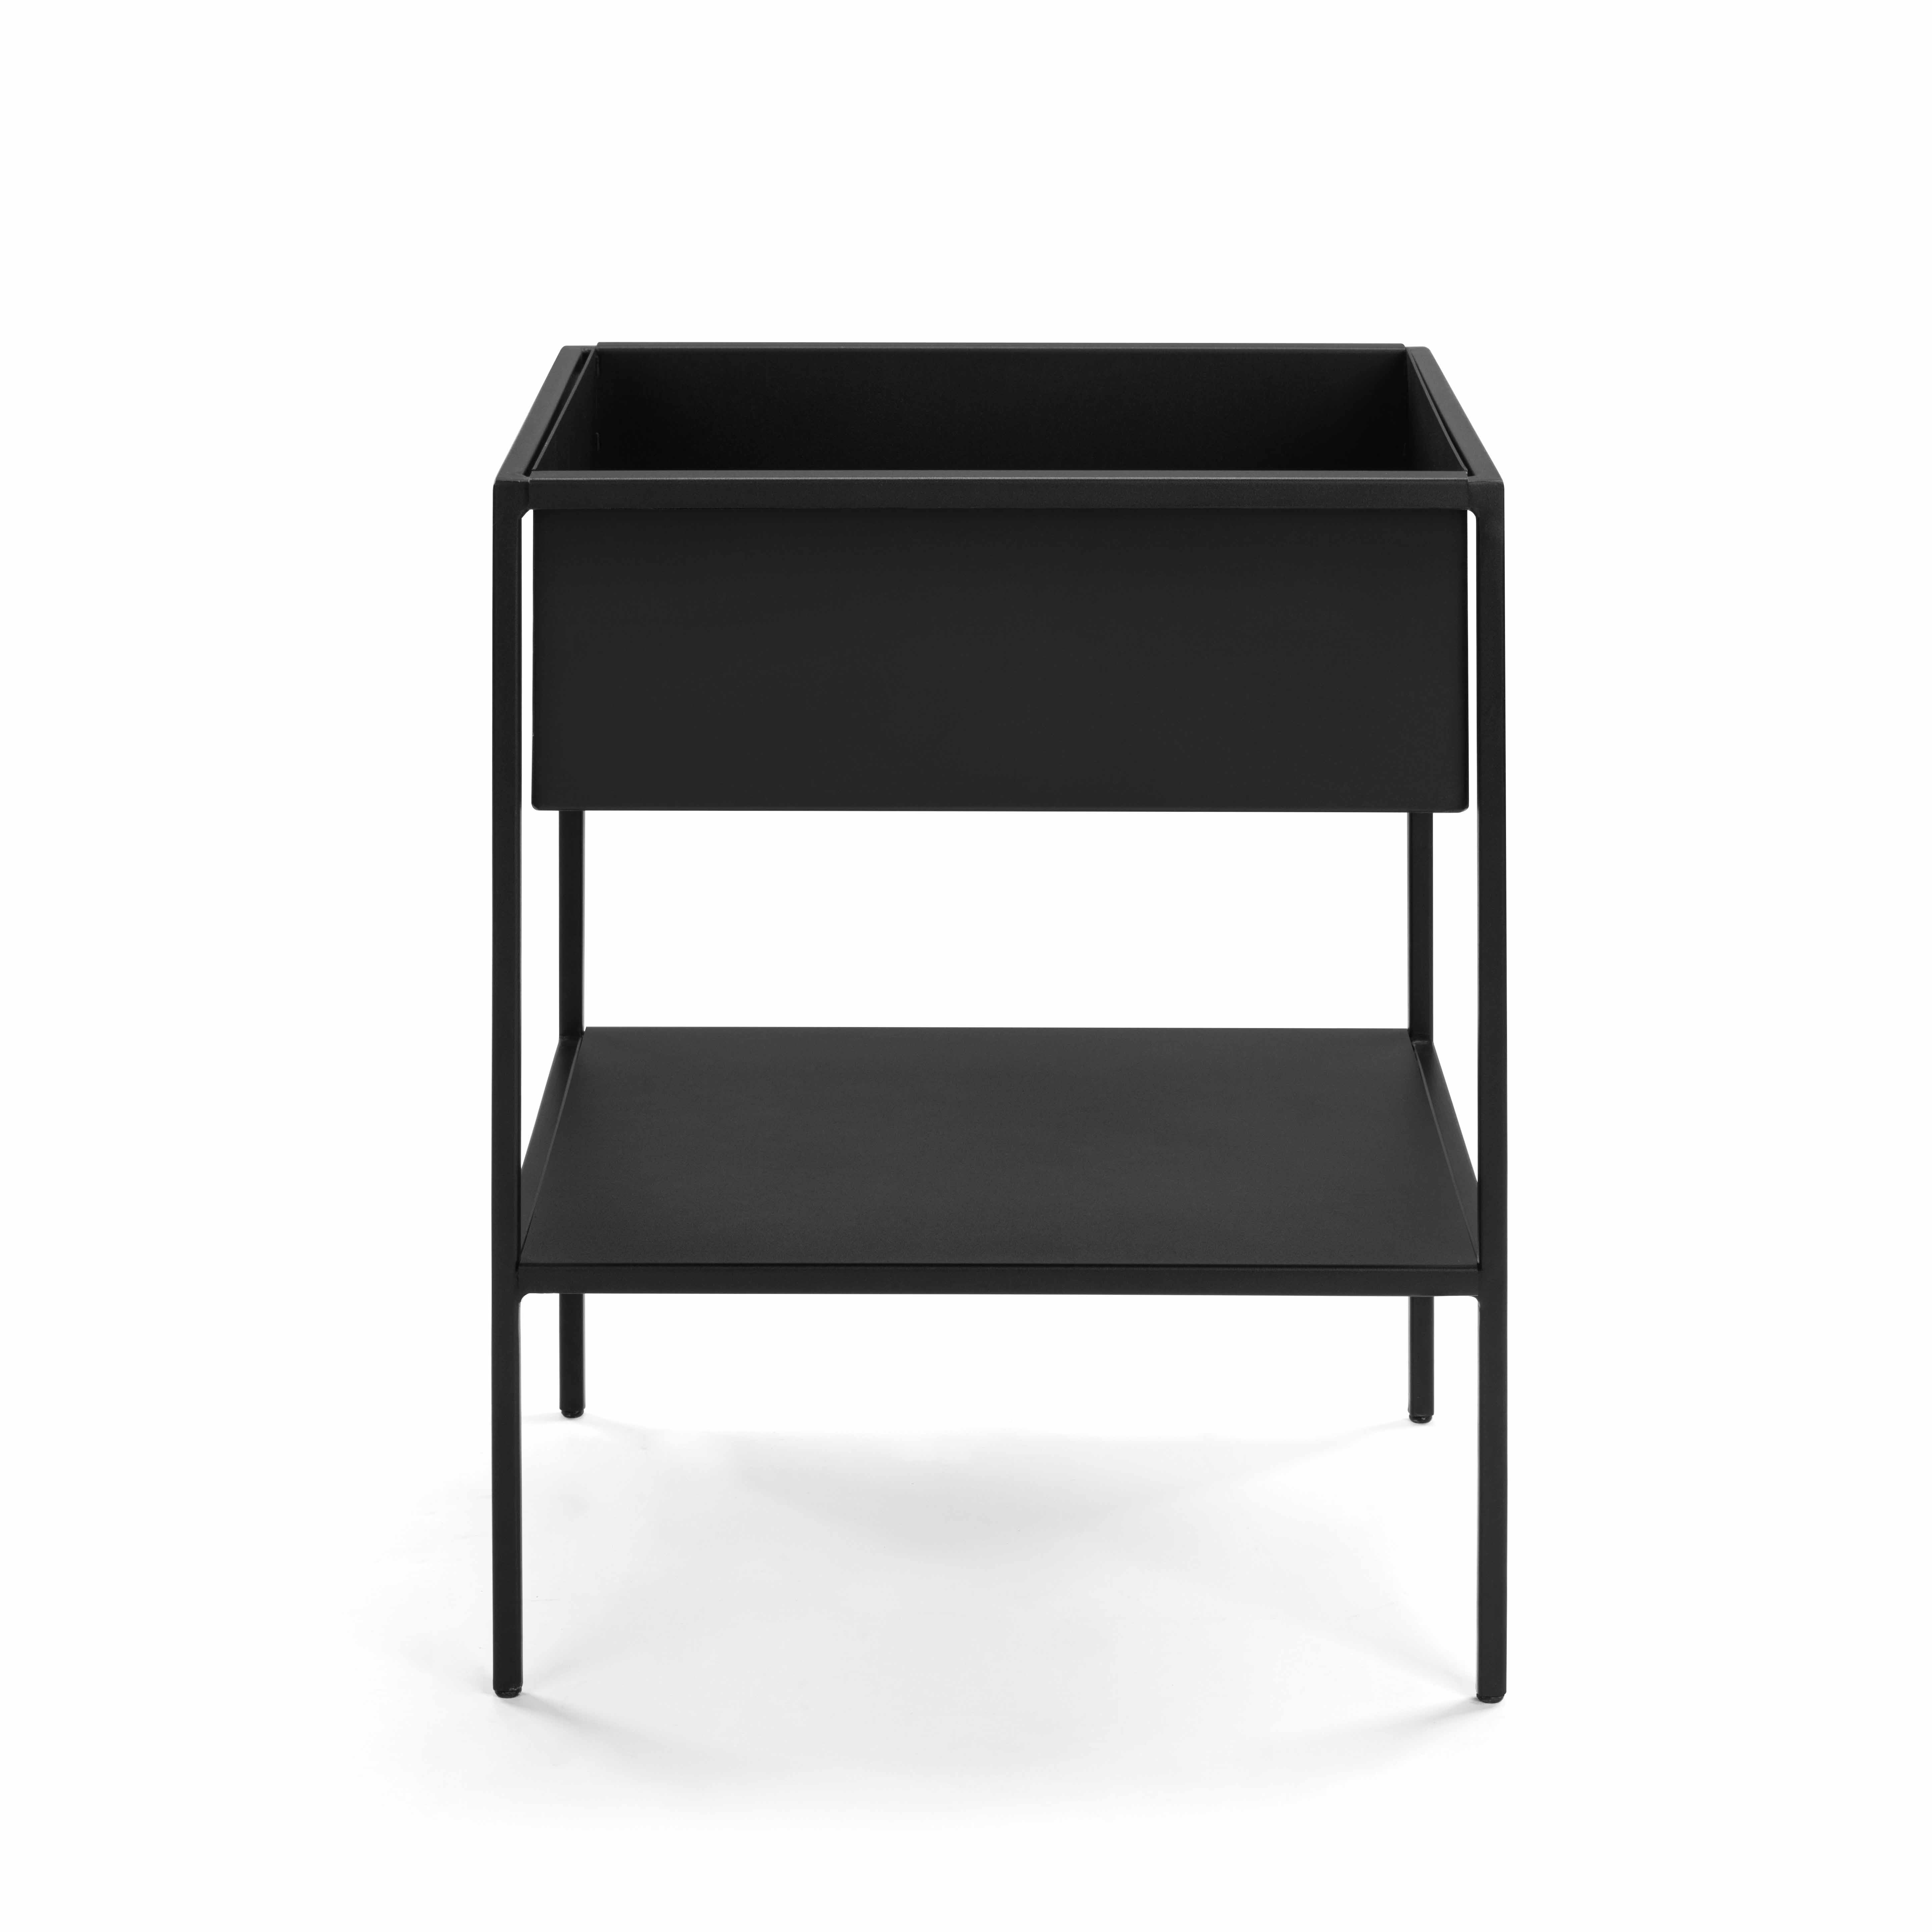 WS - Urban side table - 1x planter, 1x shelf - Black (Front)